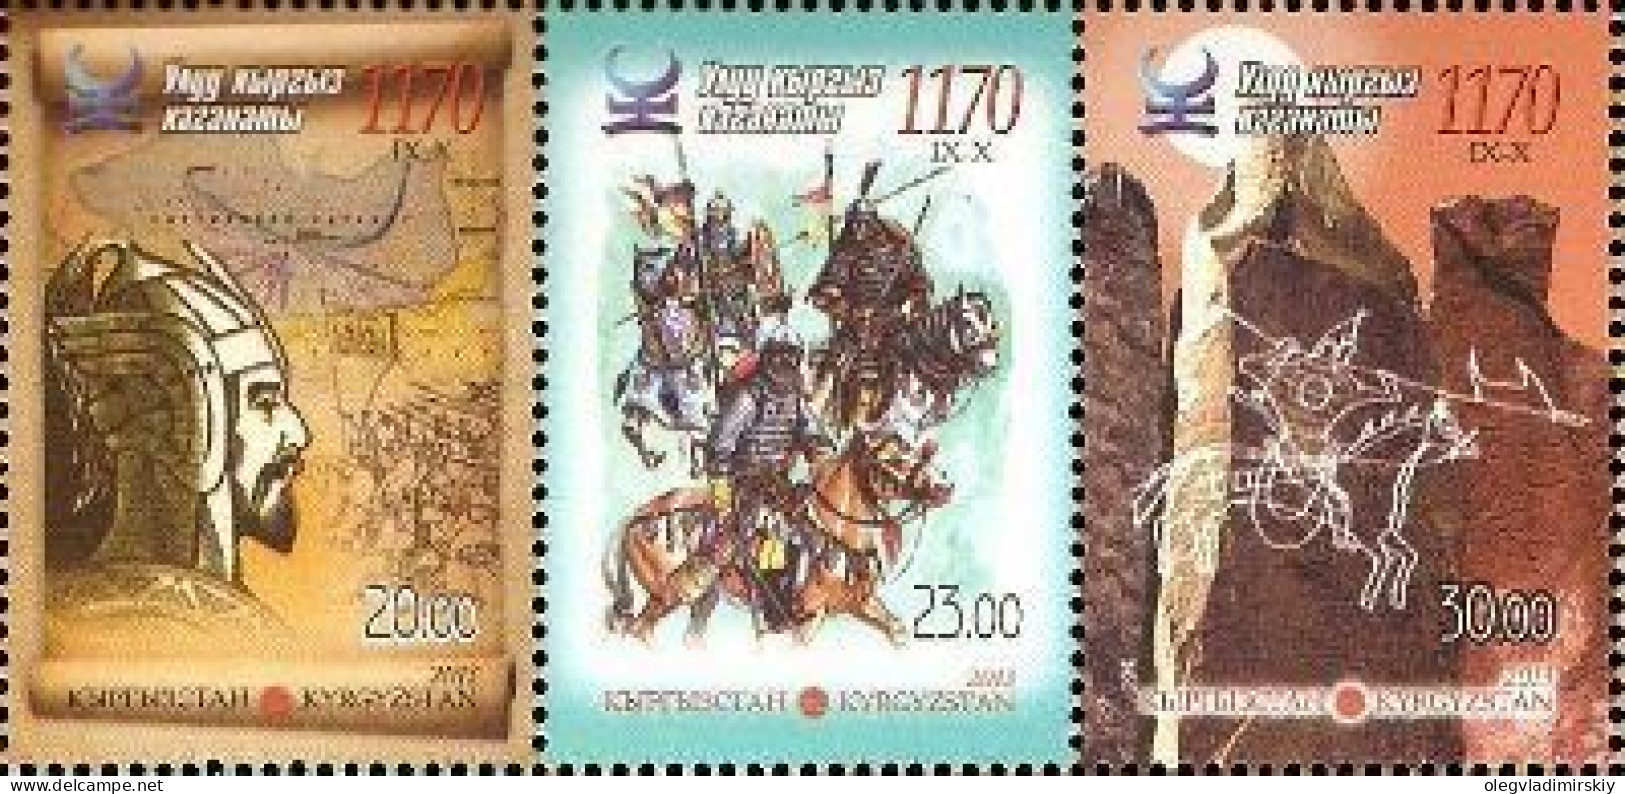 Kyrgyzstan 2013 Great Kyrgyz Kaganate 1170 Years Set Of 3 Stamps In Strip MNH - Kirgisistan